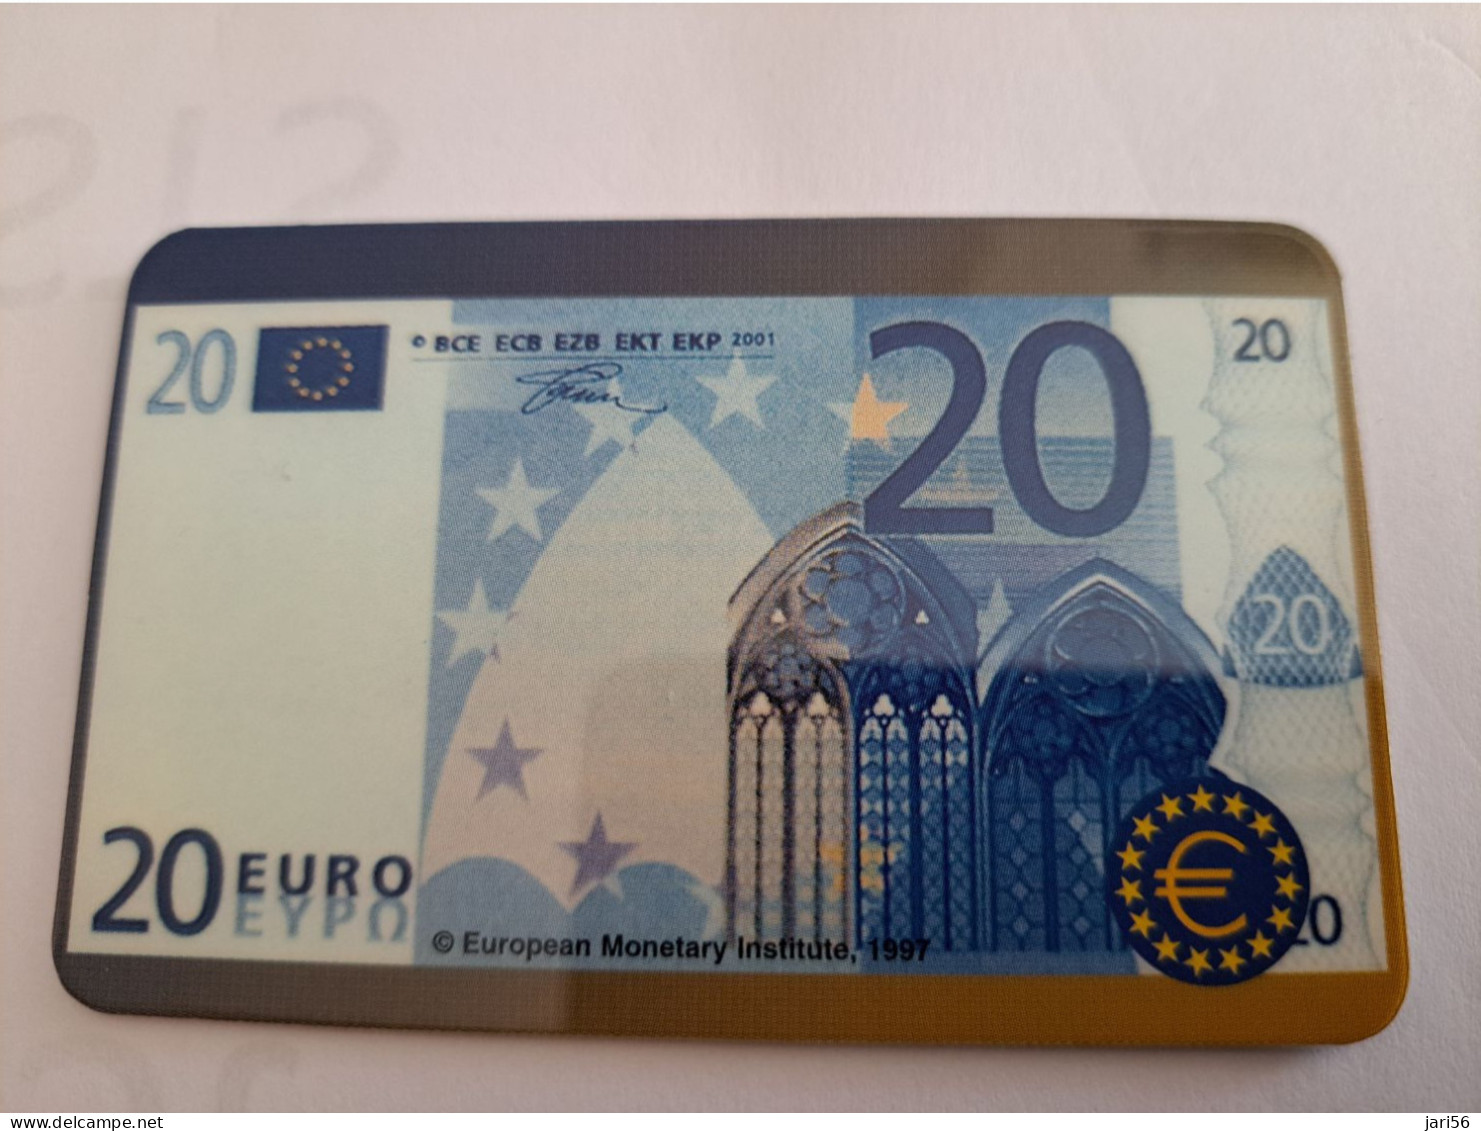 GREAT BRITAIN   20 UNITS   / EURO COINS/ BILJET 20 EURO    (date 03/ 98)  PREPAID CARD / MINT      **16505** - [10] Colecciones